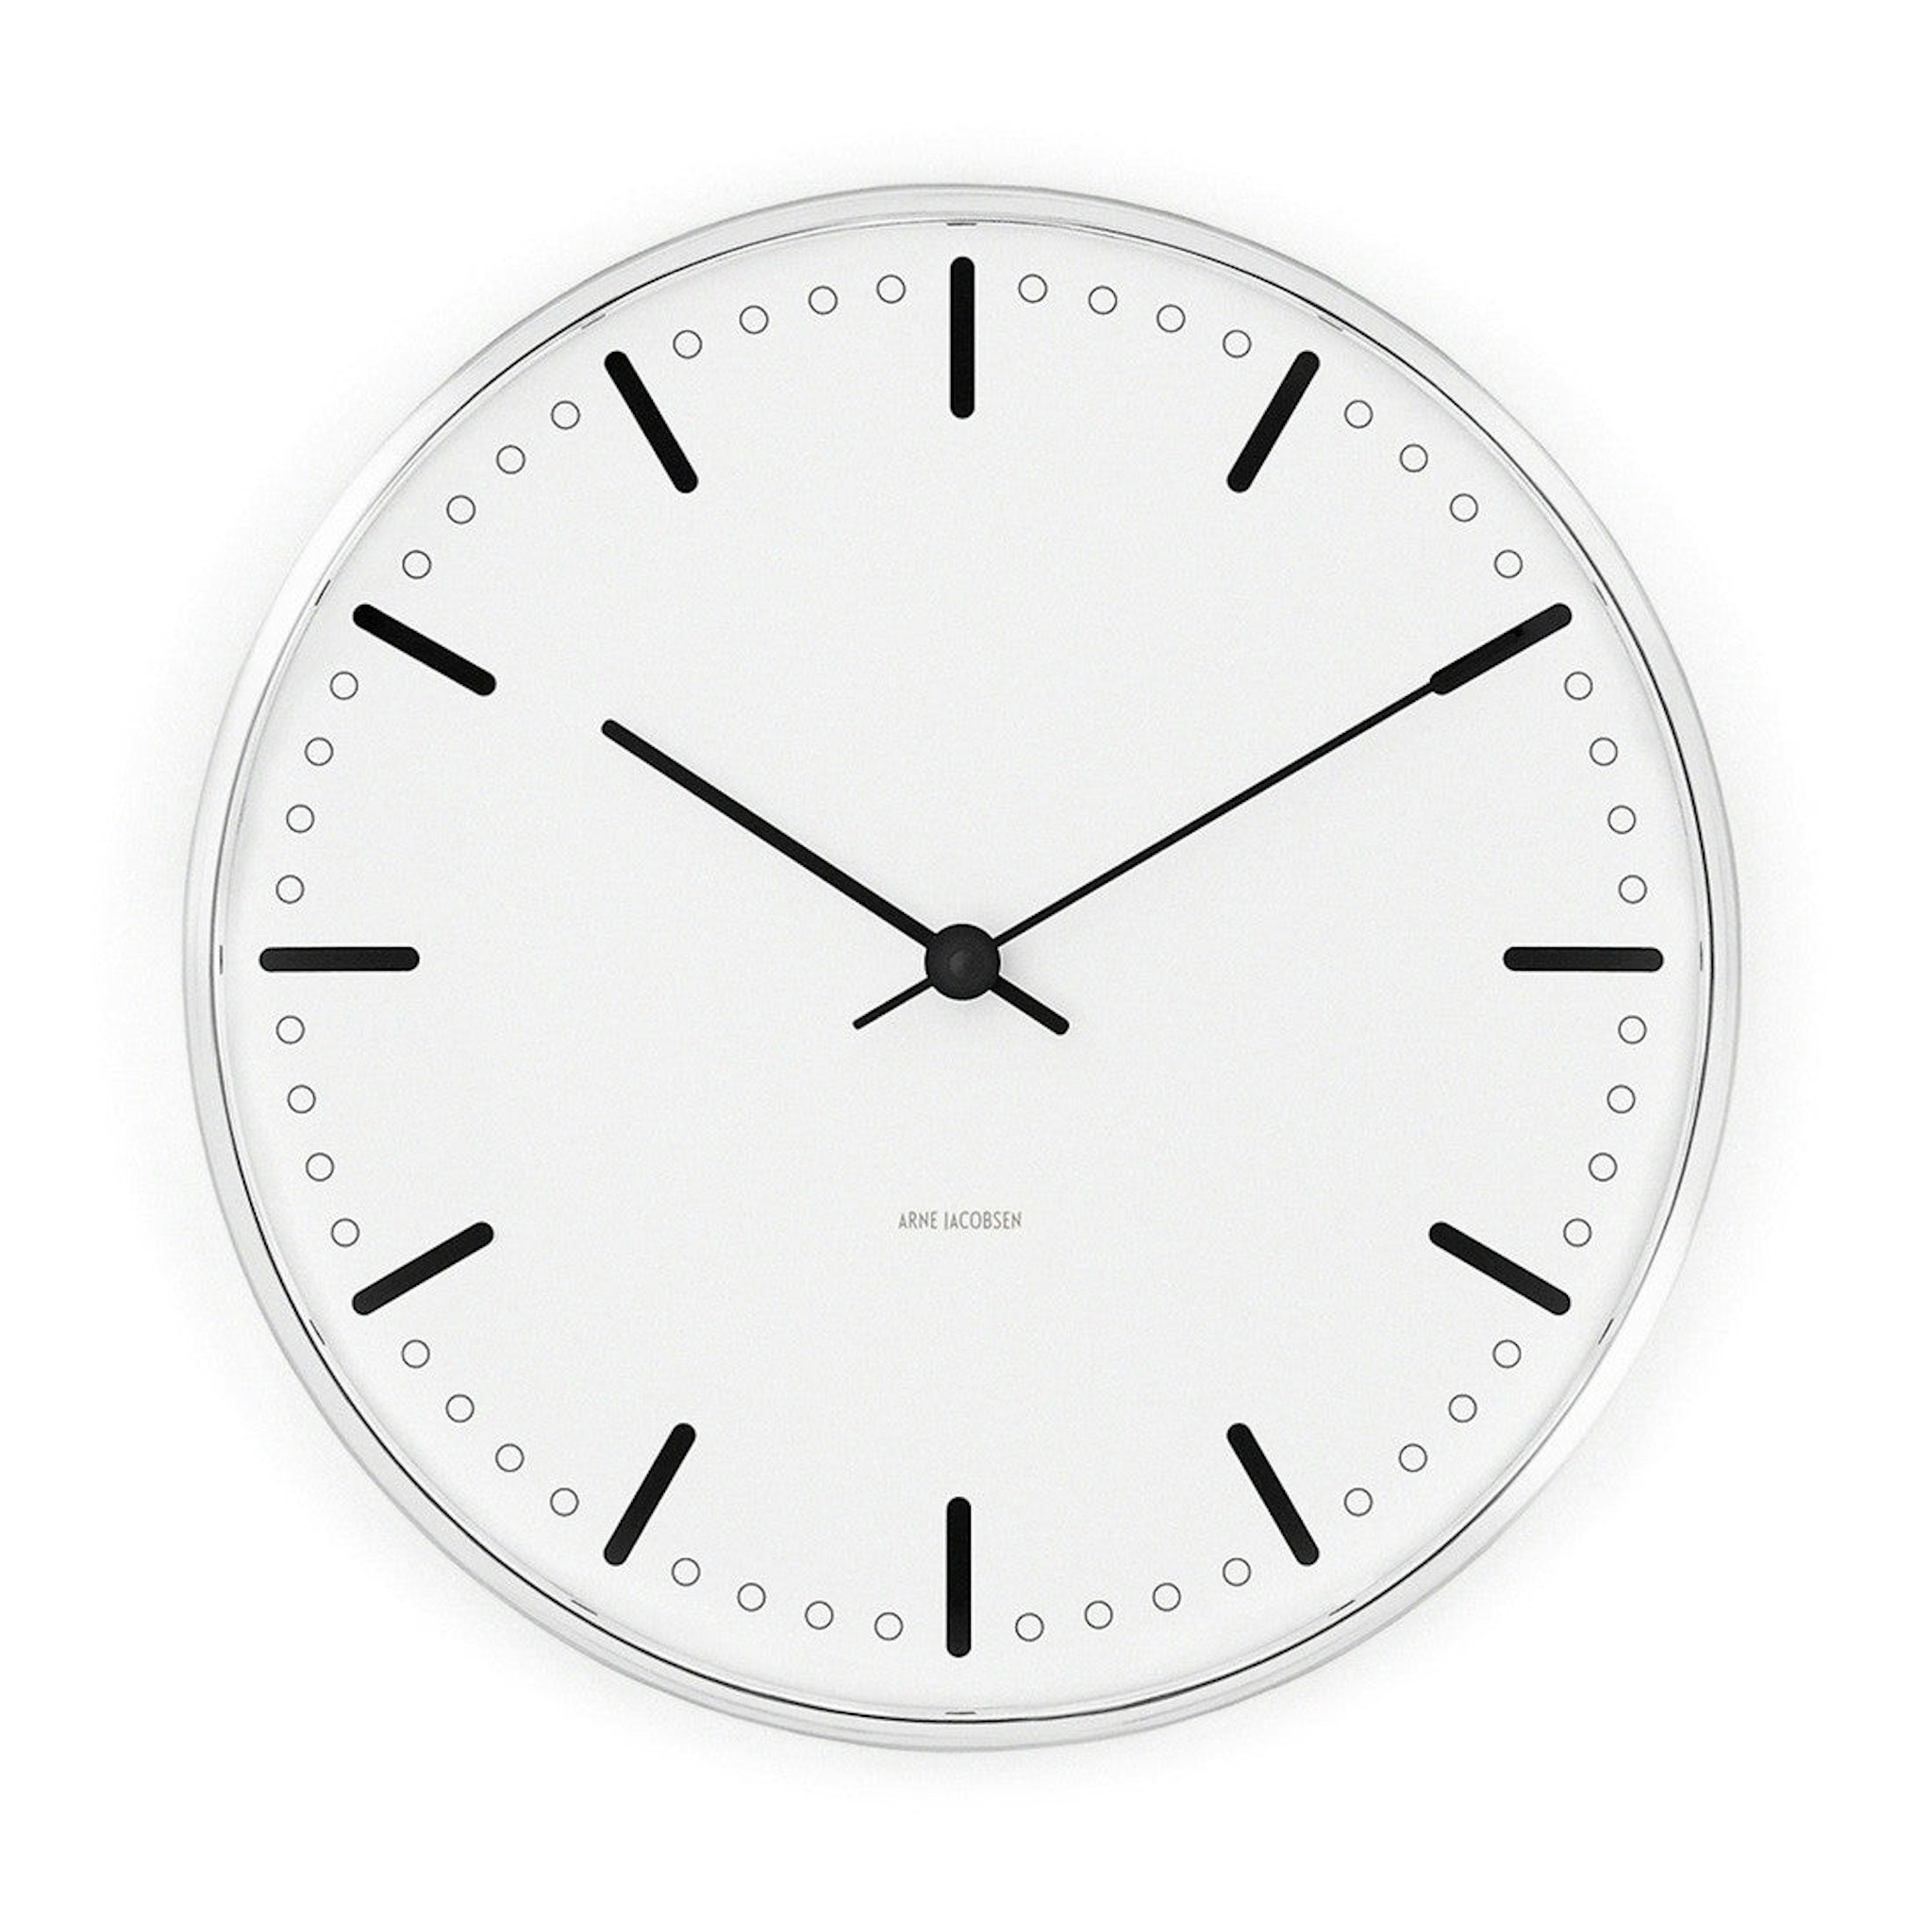 City Hall Clock by Arne Jacobsen